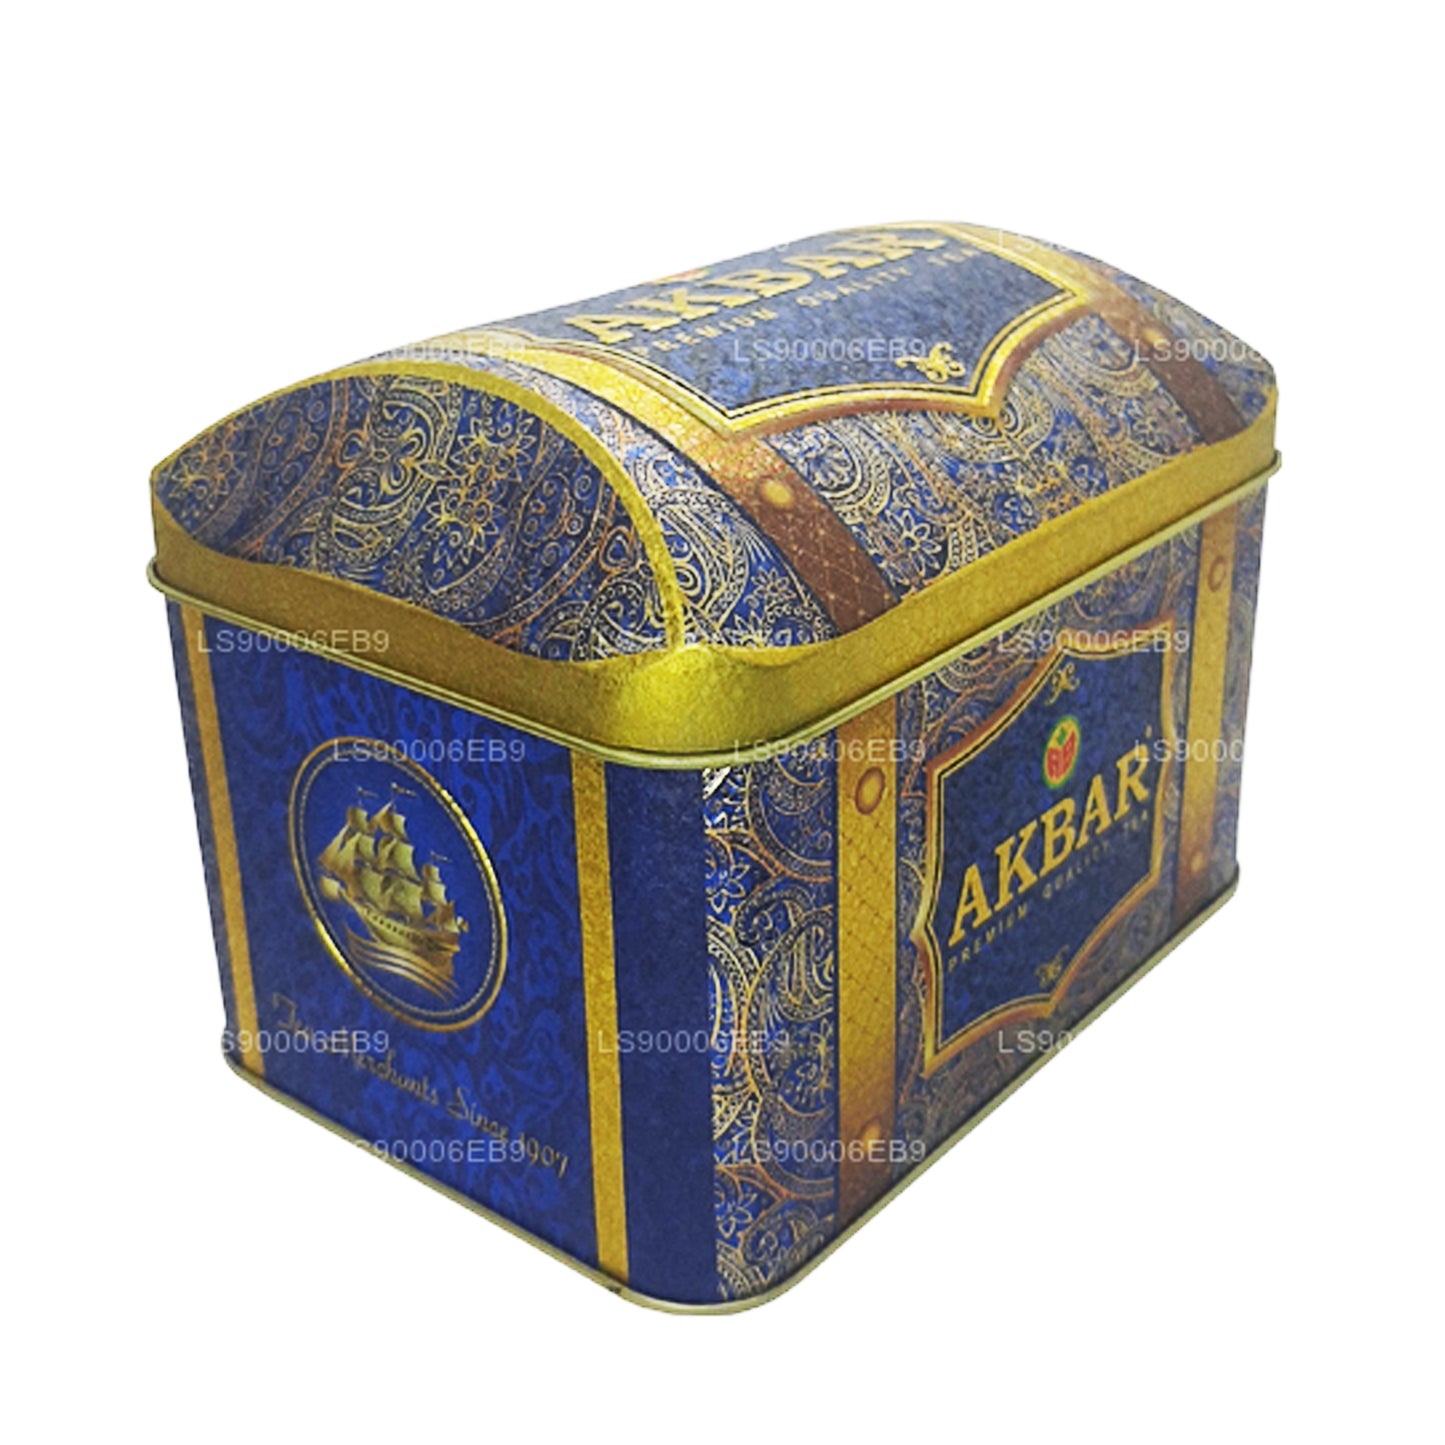 Akbar eksklusive samling orientalsk mysterium Treasure Box (250g)